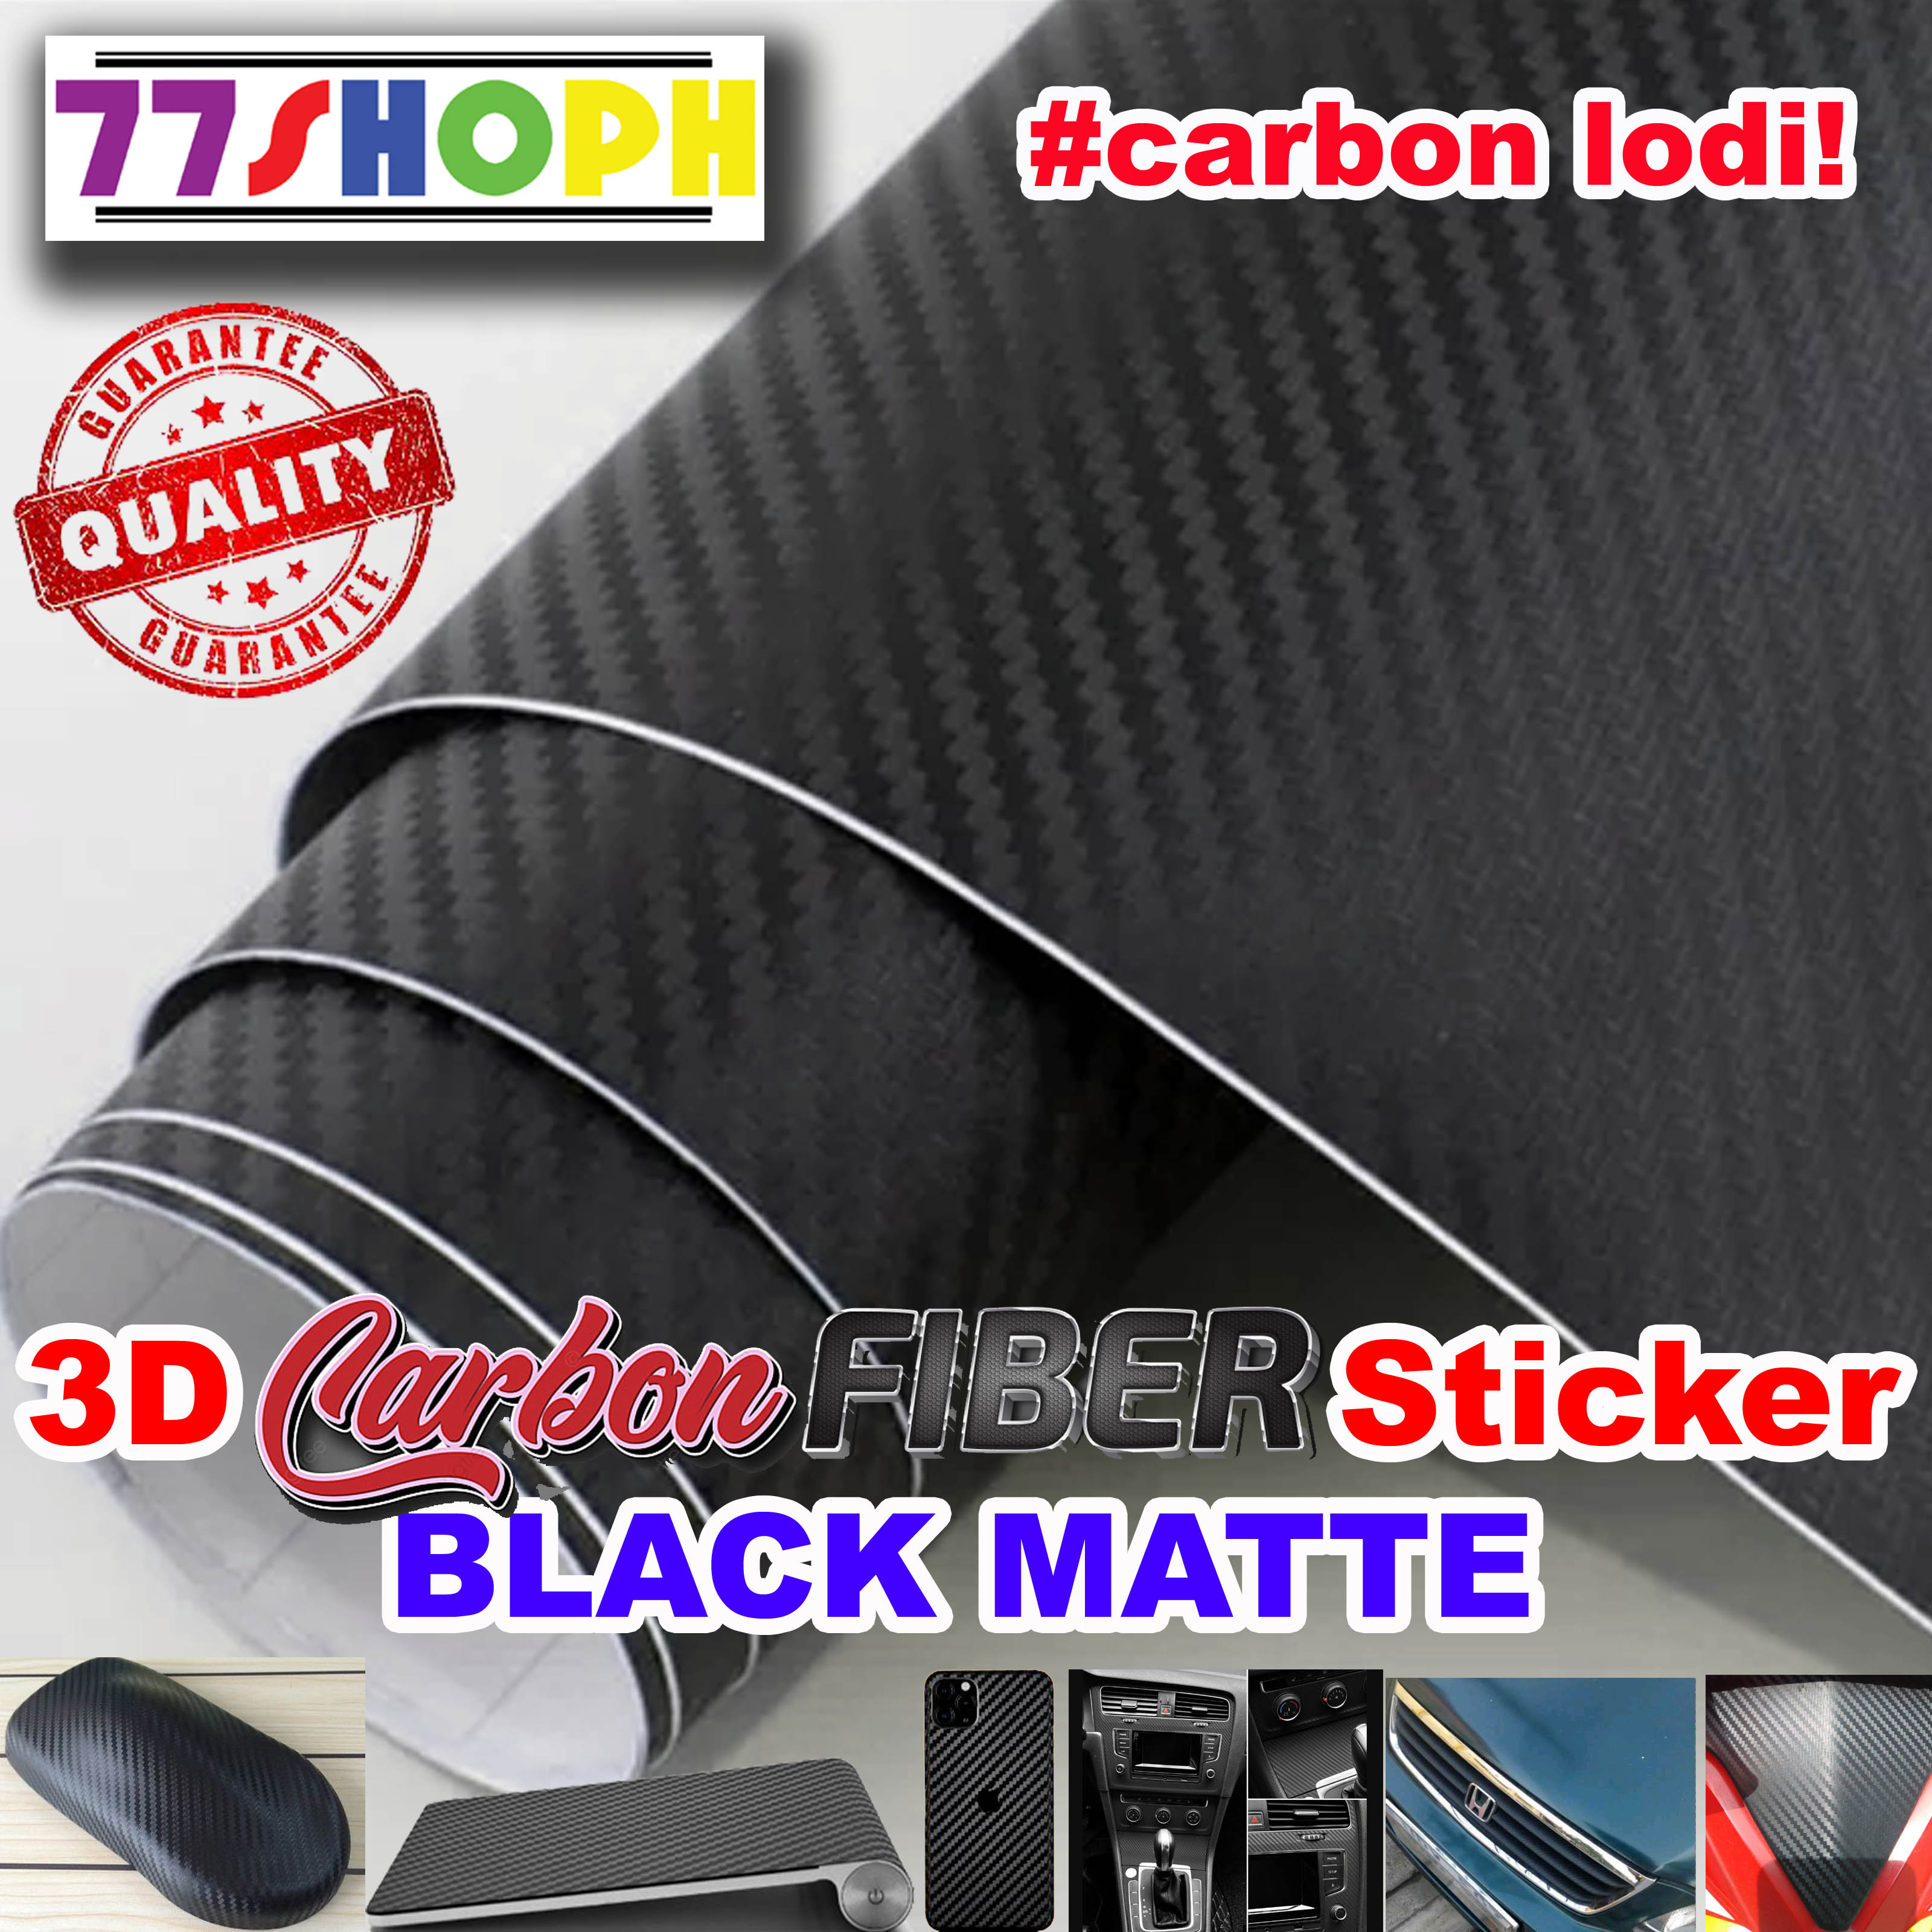 5D Carbon Fiber Car Sticker Matte Black Gloss Vinyl Wrap Car